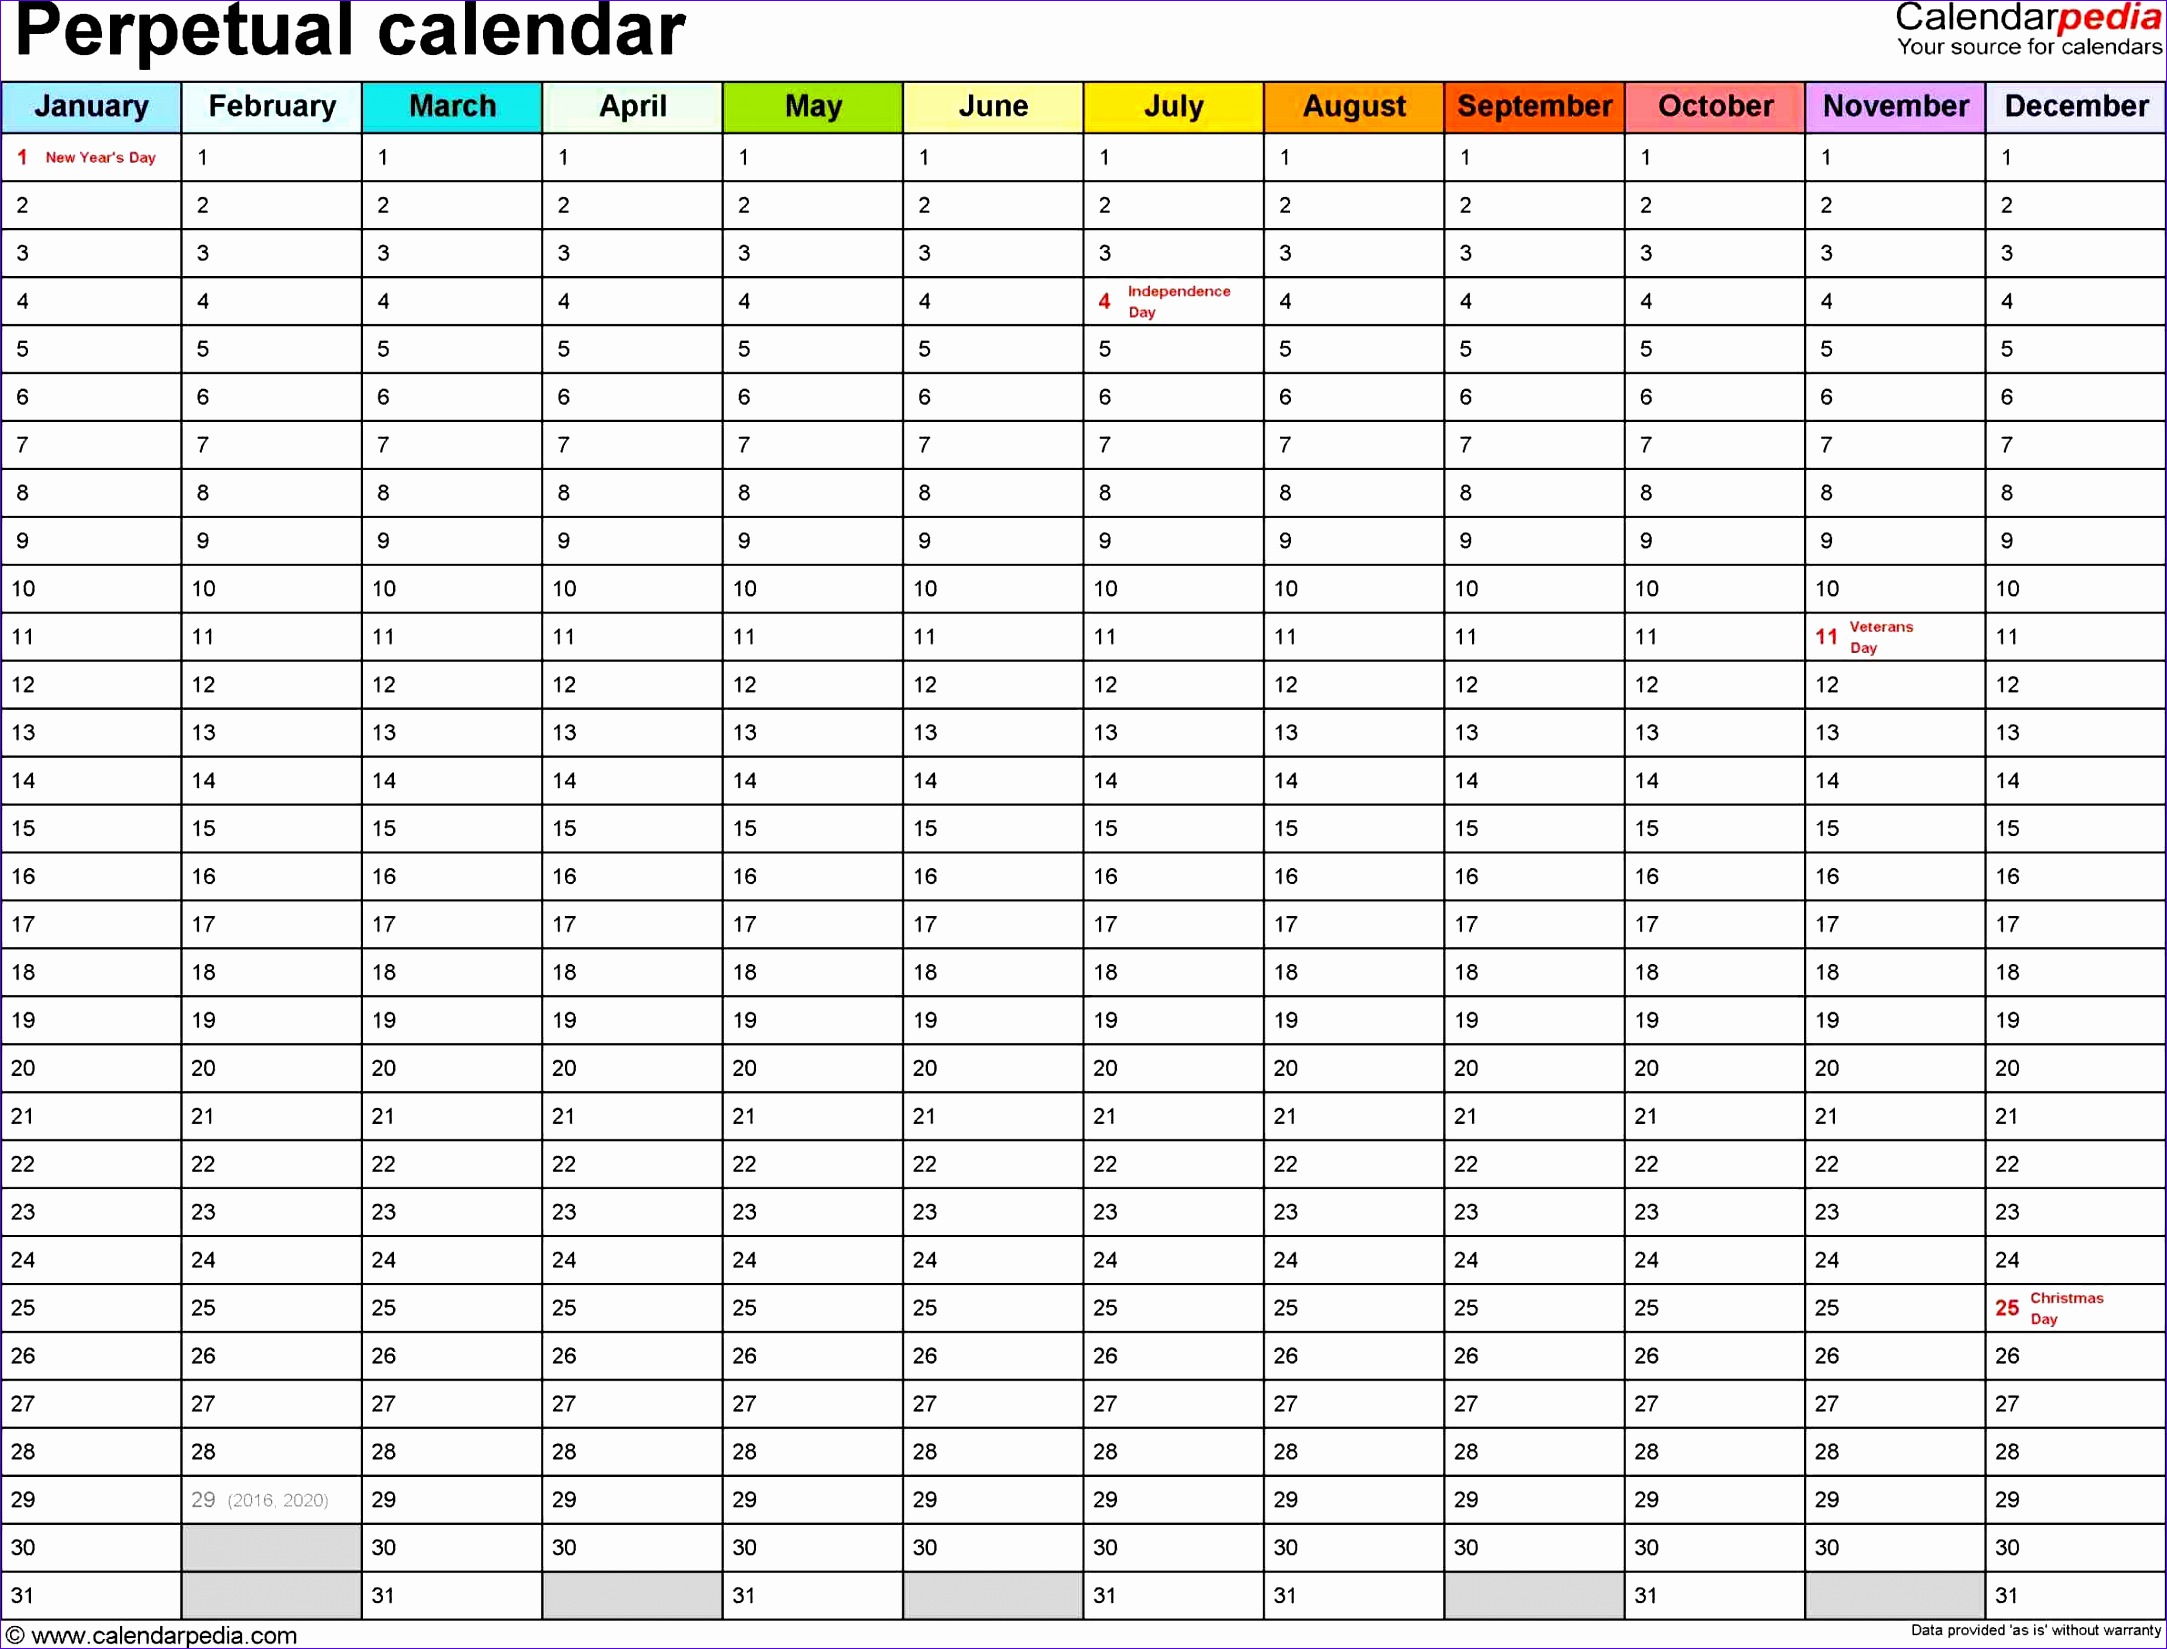 Weekly schedule planner template excel visualbrains.info